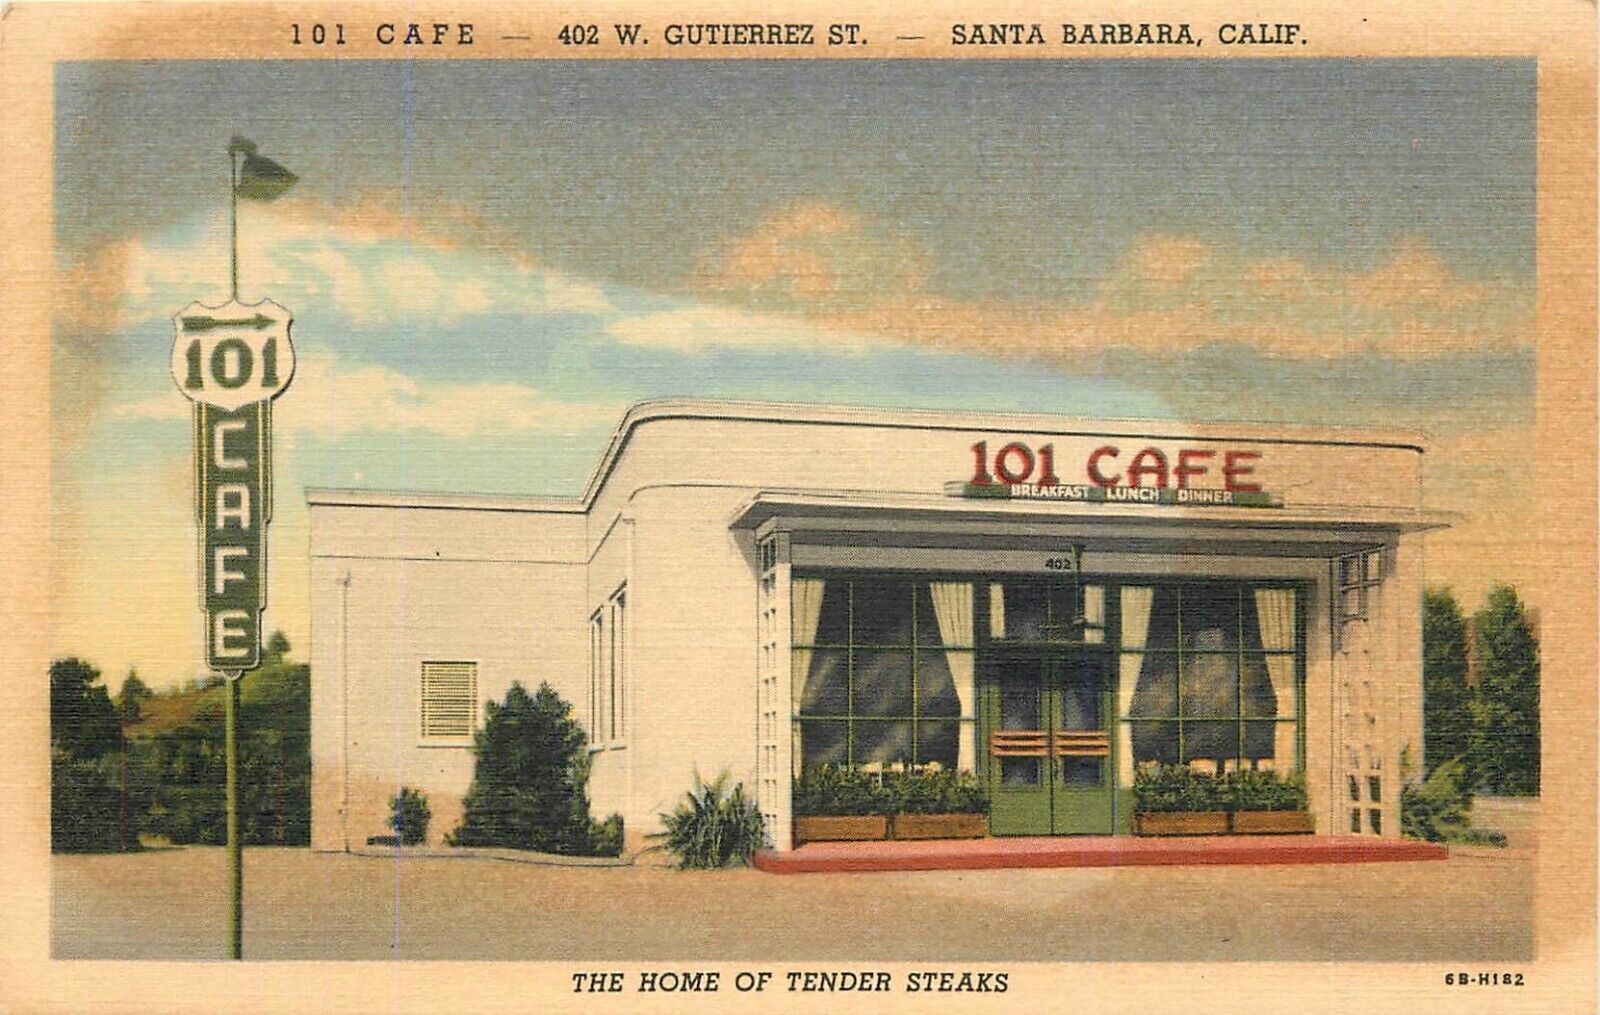 c1940 The 101 Cafe, Highway 101, Santa Barbara, California Postcard